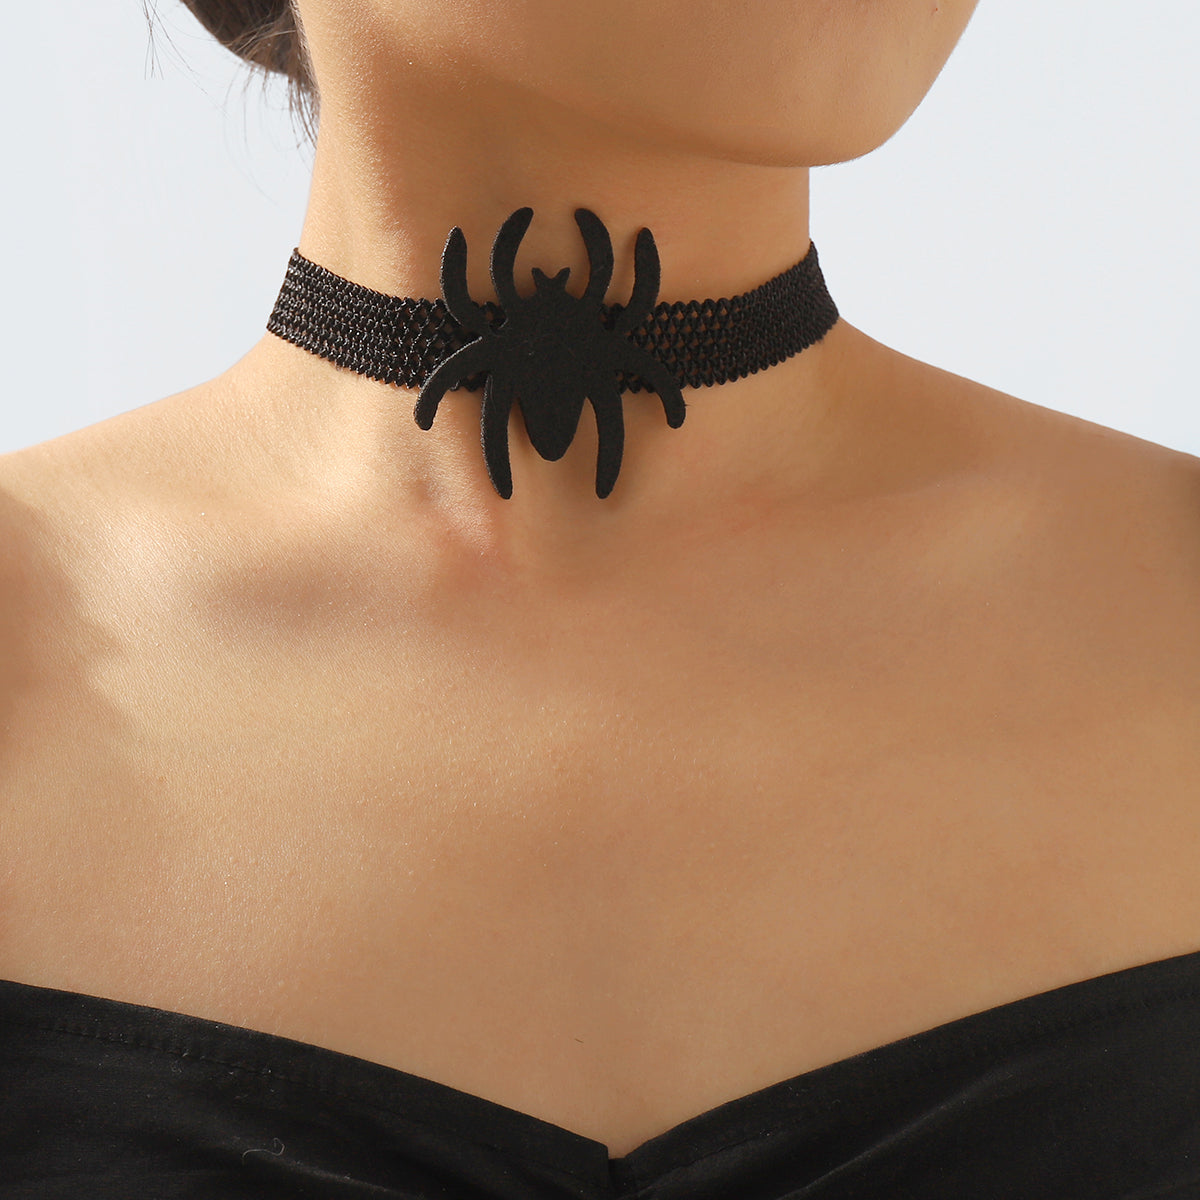 N11407 Halloween Black Spider Choker Necklace